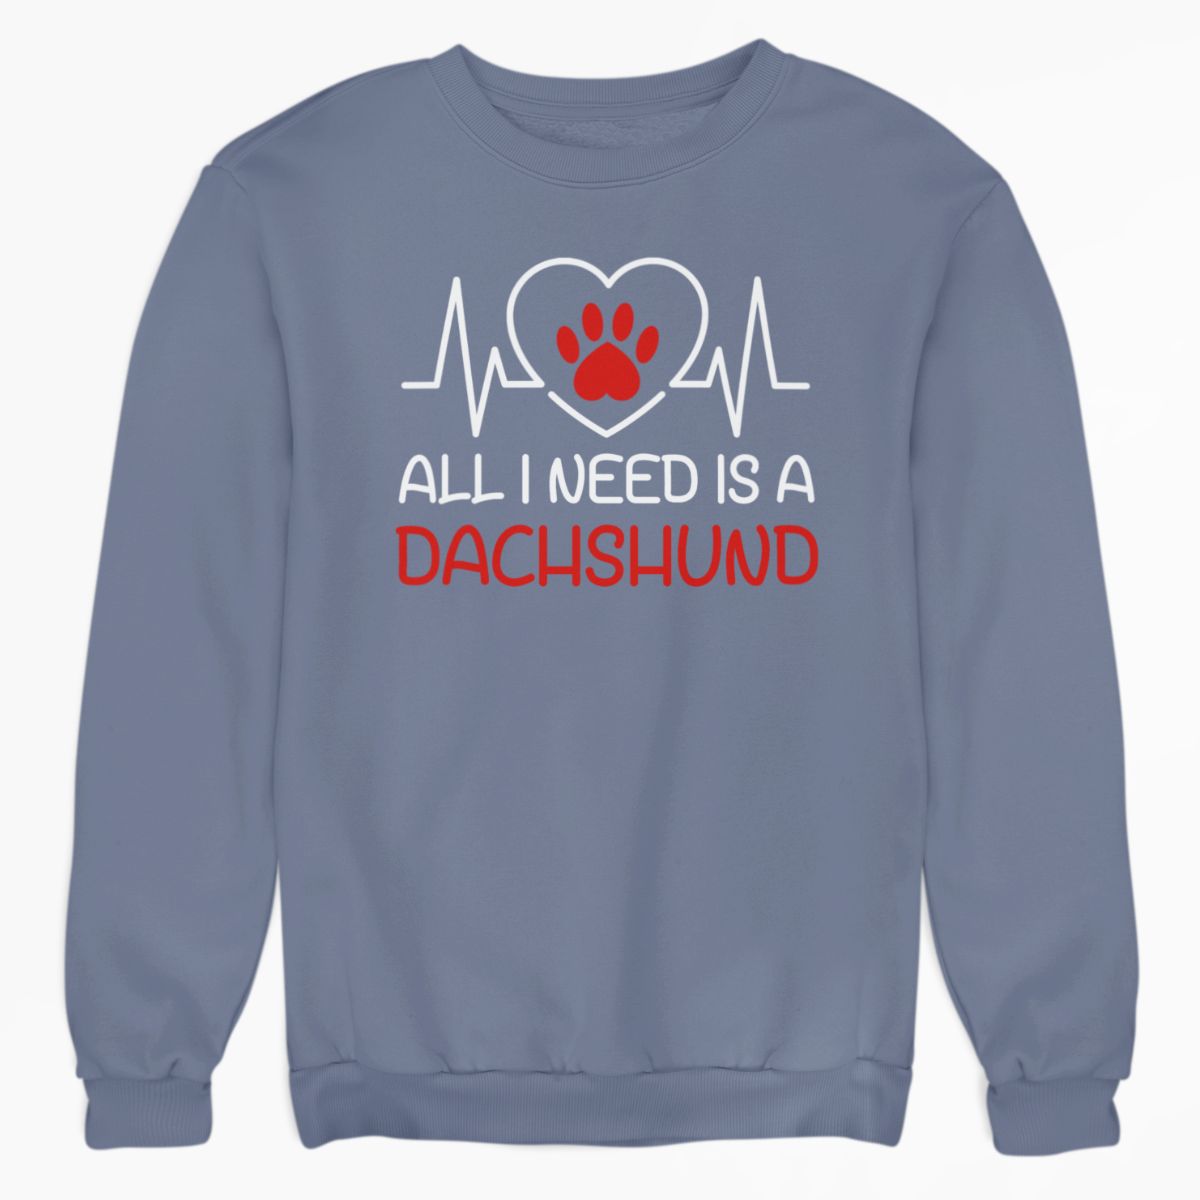 All I Need is a Dachshund Shirt